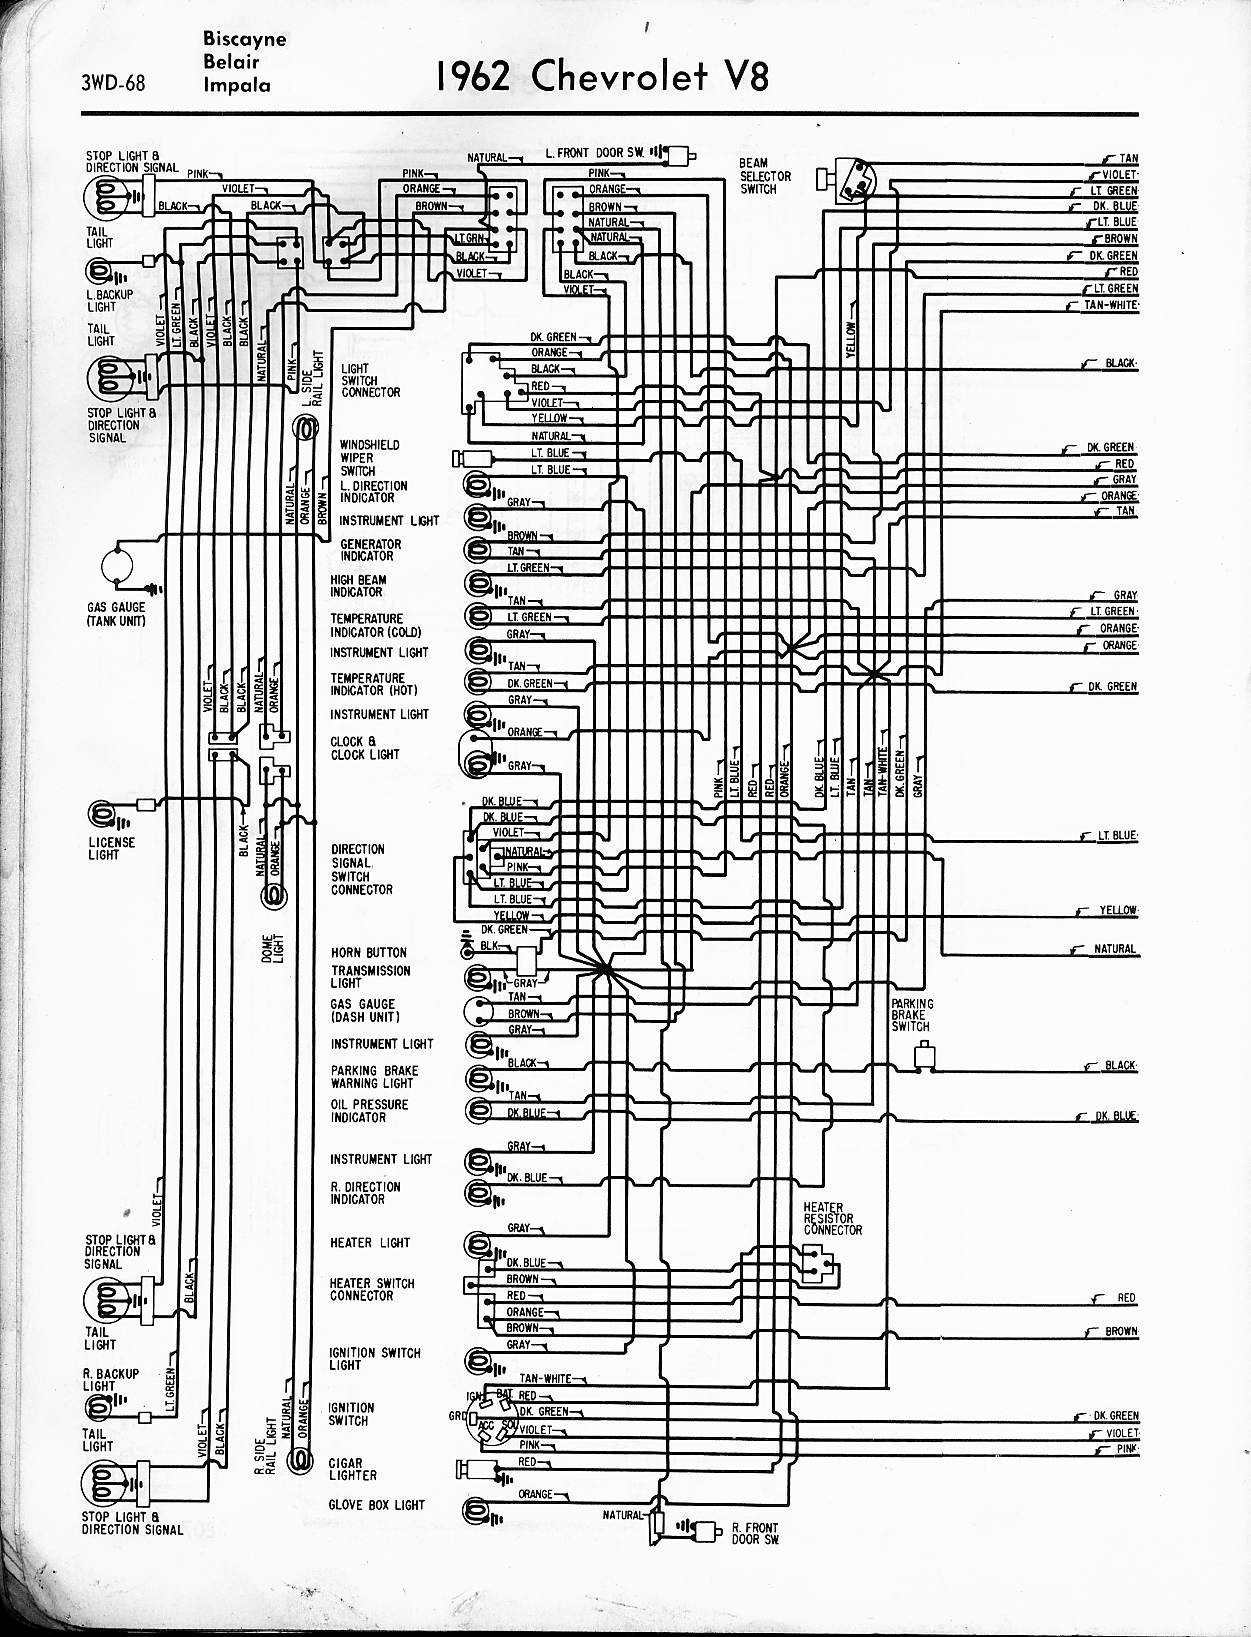 2000 Chevy Impala Engine Diagram 57 65 Chevy Wiring Diagrams